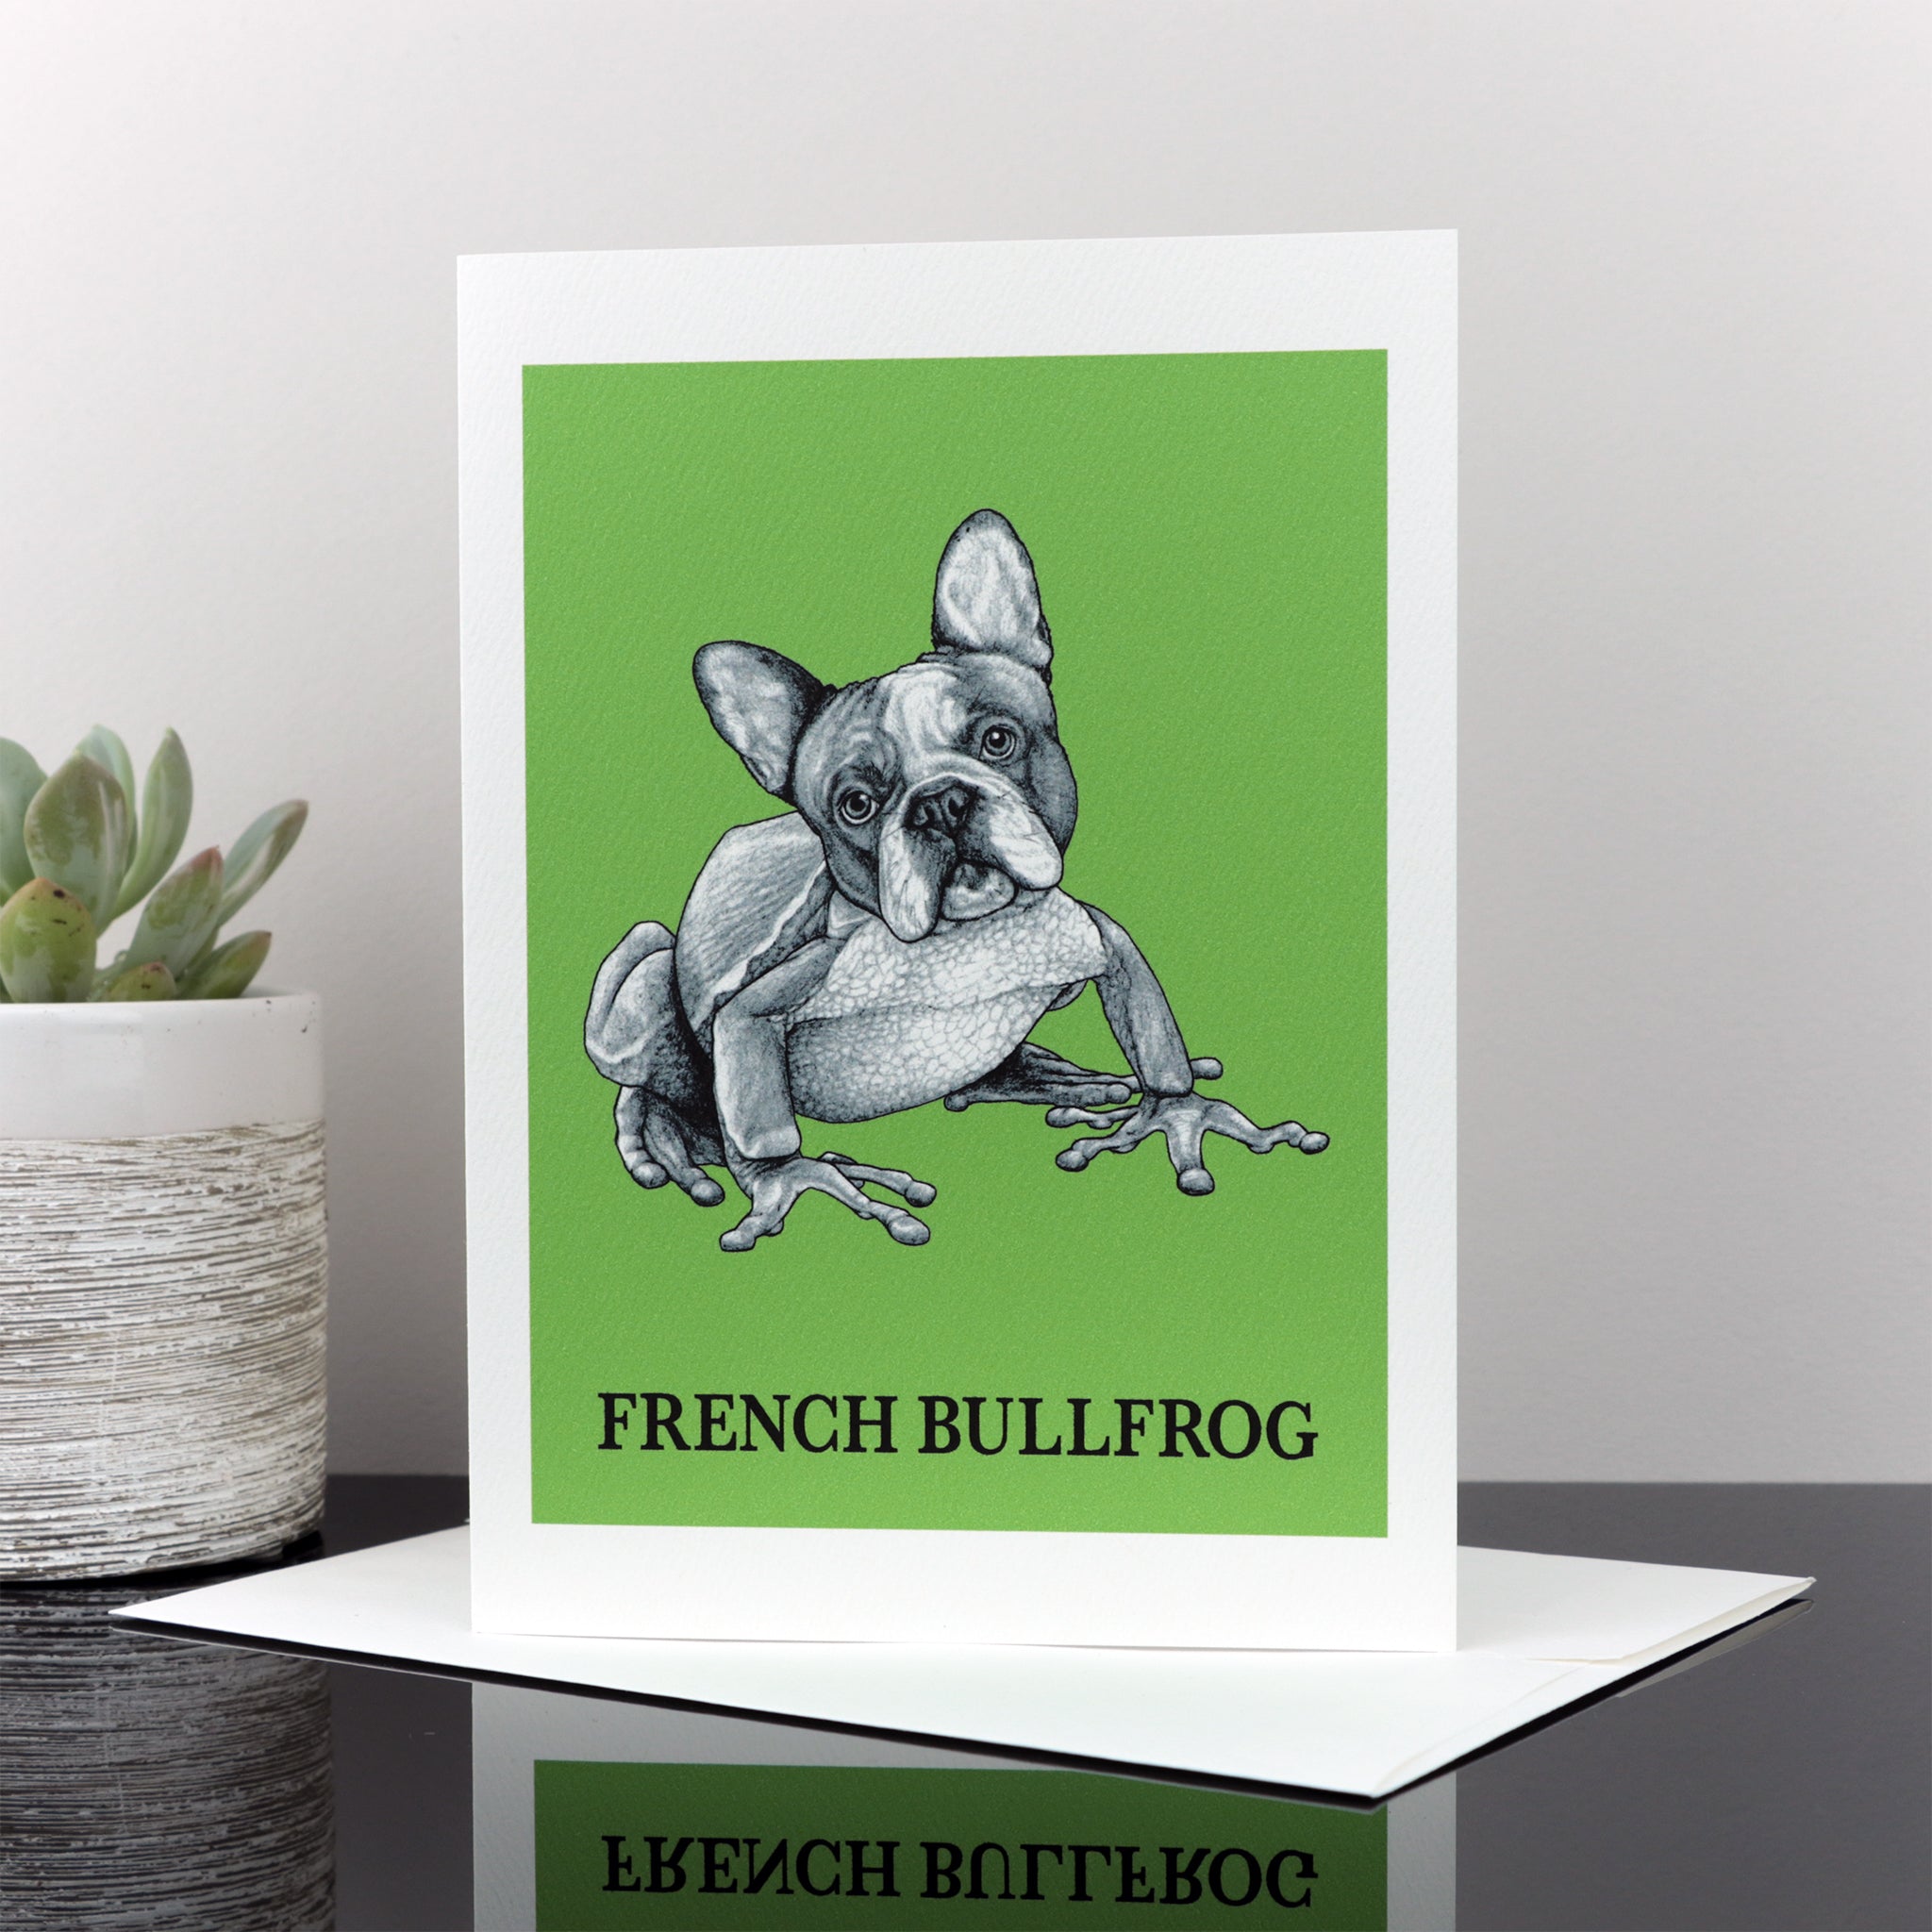 French Bullfrog 5x7" Greeting Card